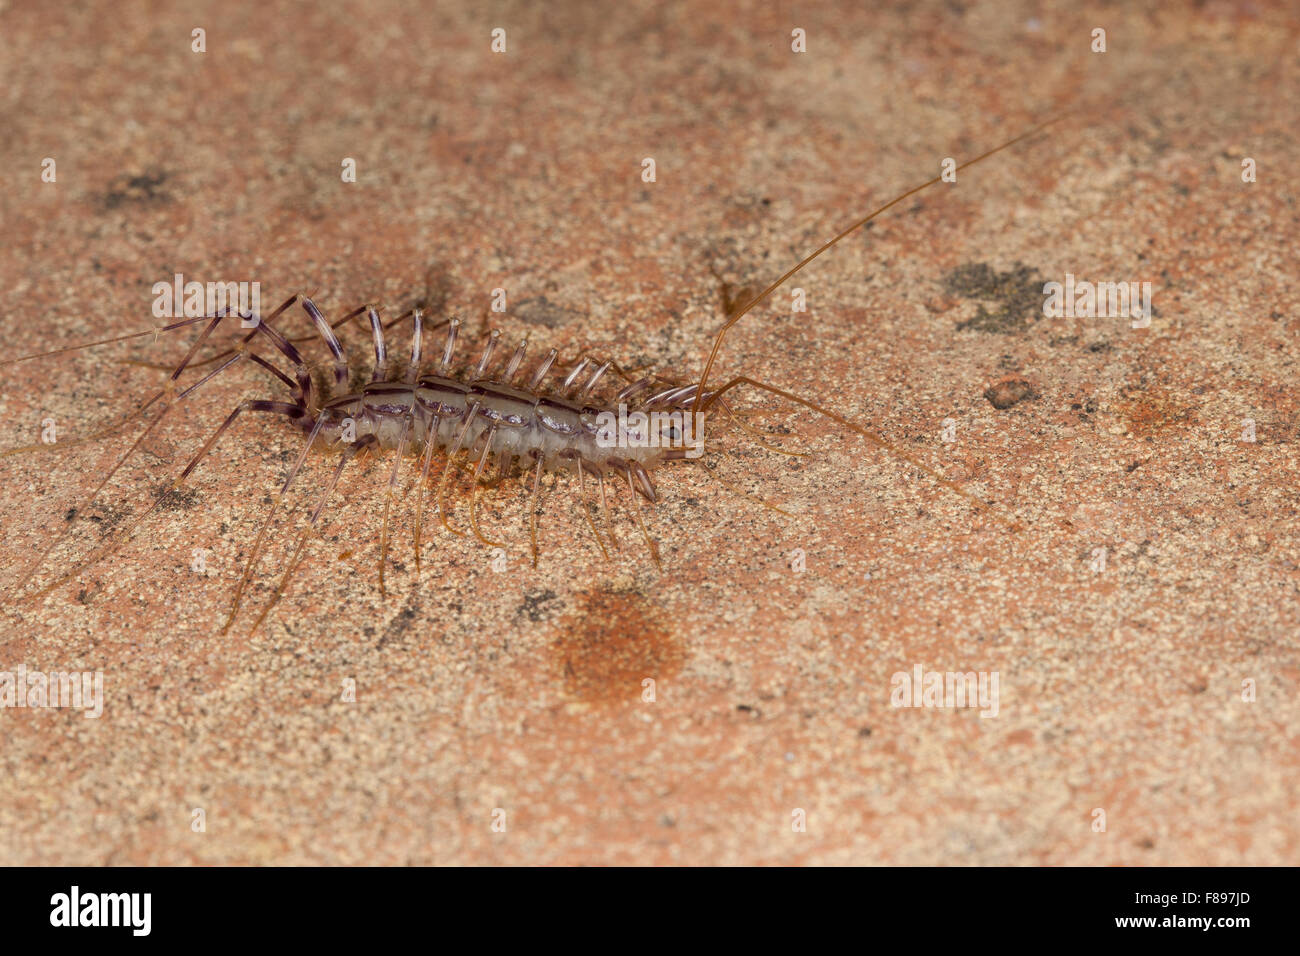 House centipede, Spinnenläufer, Spinnenassel, Spinnen-Läufer, Spinnen-Assel, Scutigera coleoptrata, Chilopoda Stock Photo